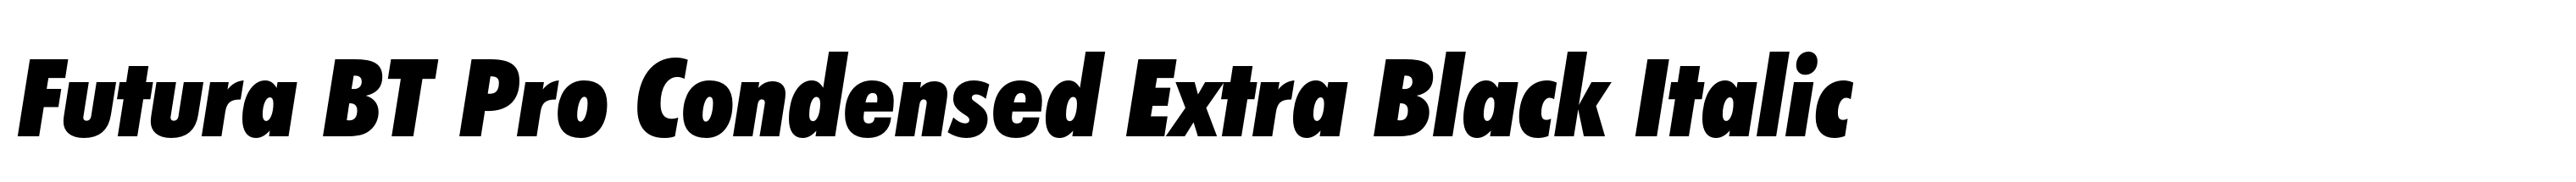 Futura BT Pro Condensed Extra Black Italic